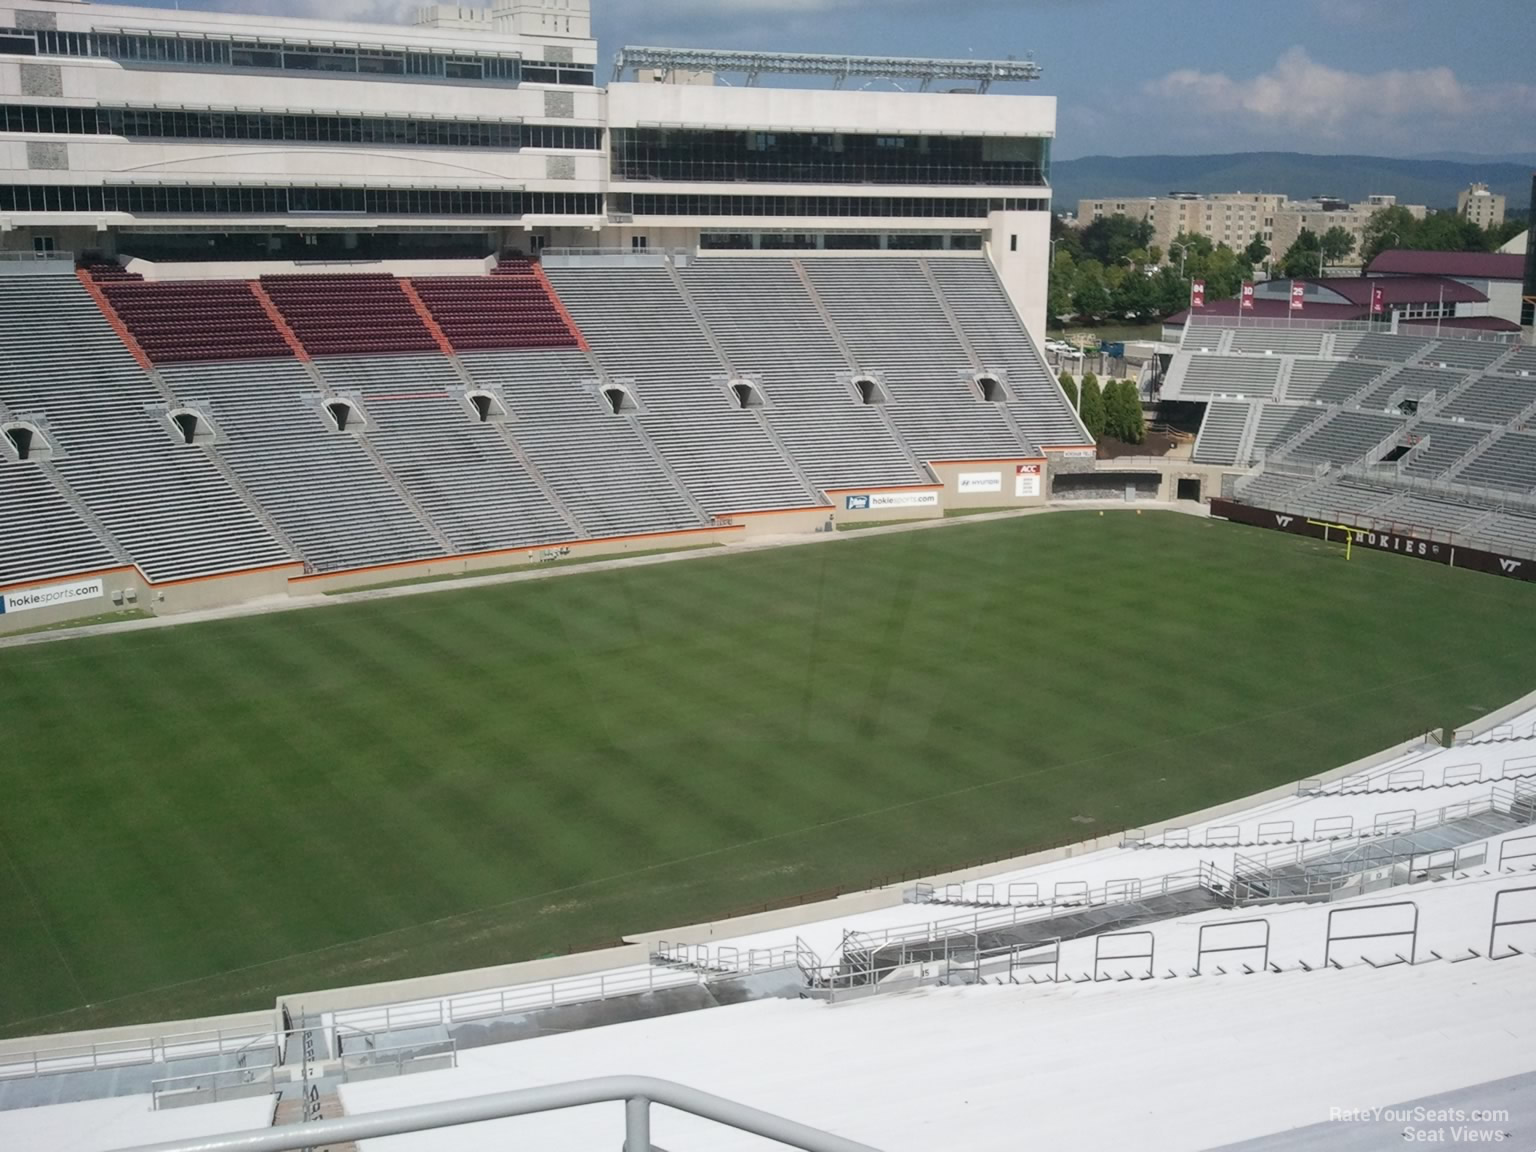 section 37, row 4k seat view  - lane stadium